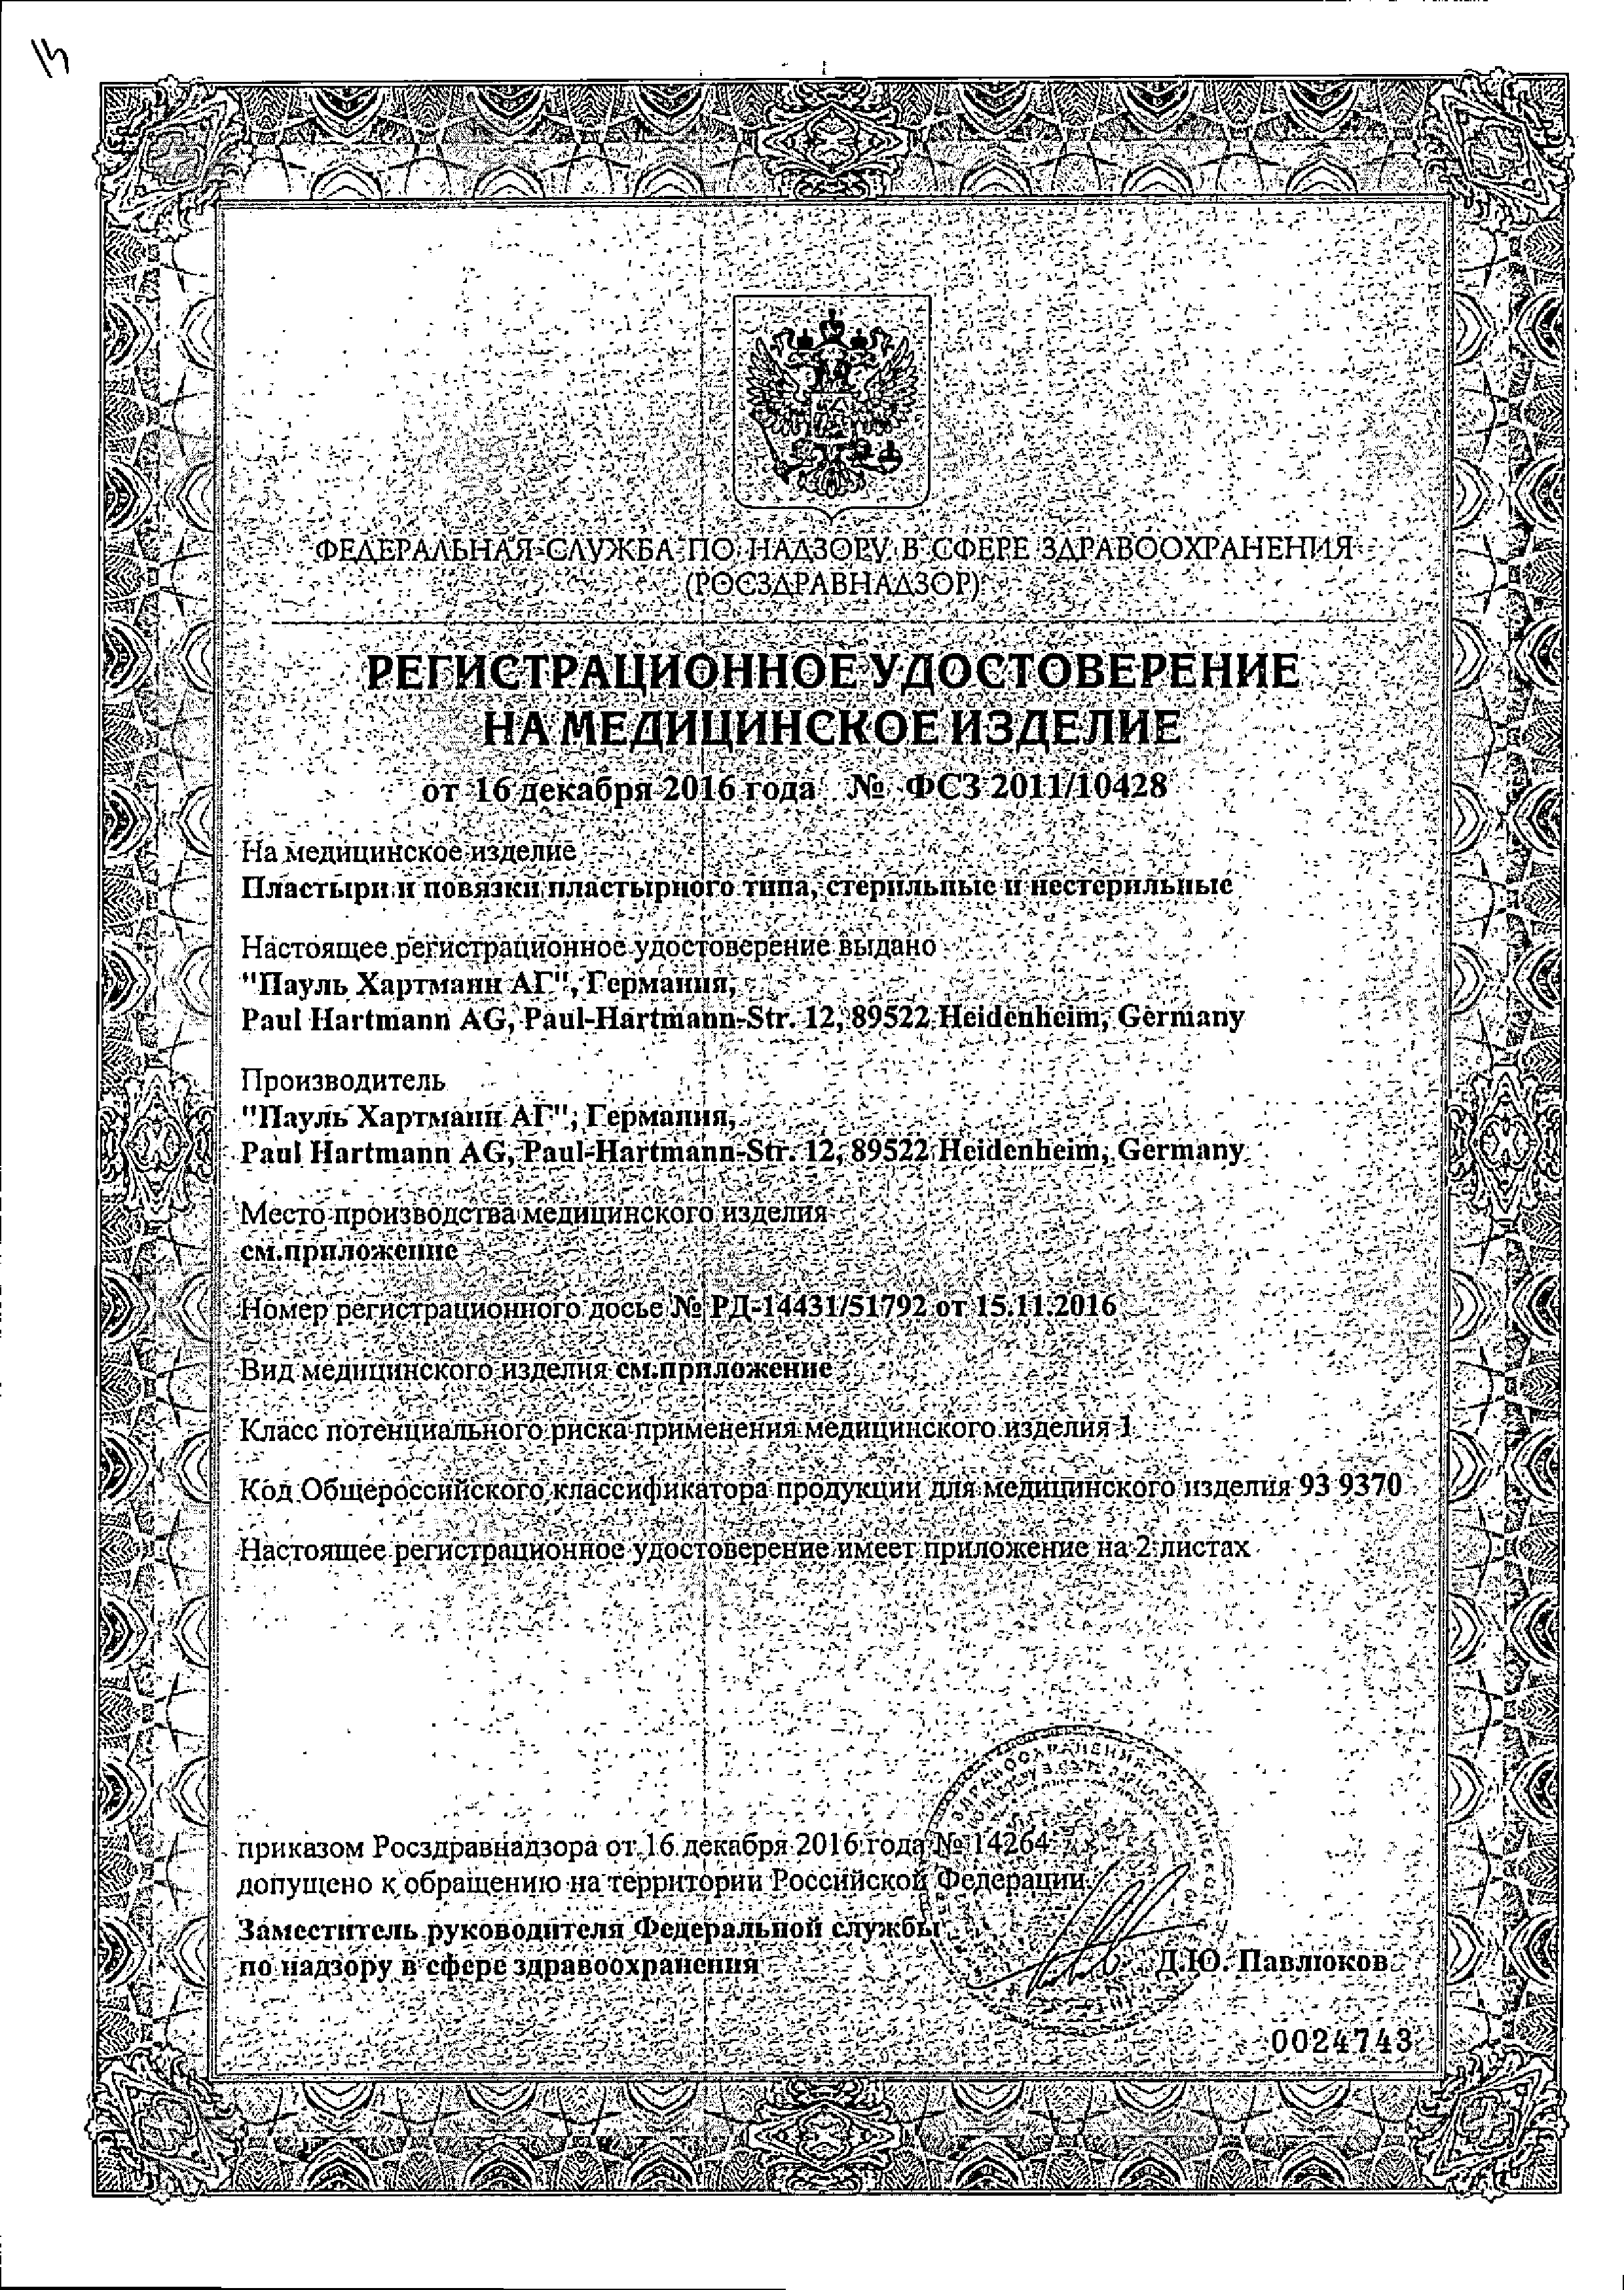 Omnipor Пластырь фиксирующий сертификат